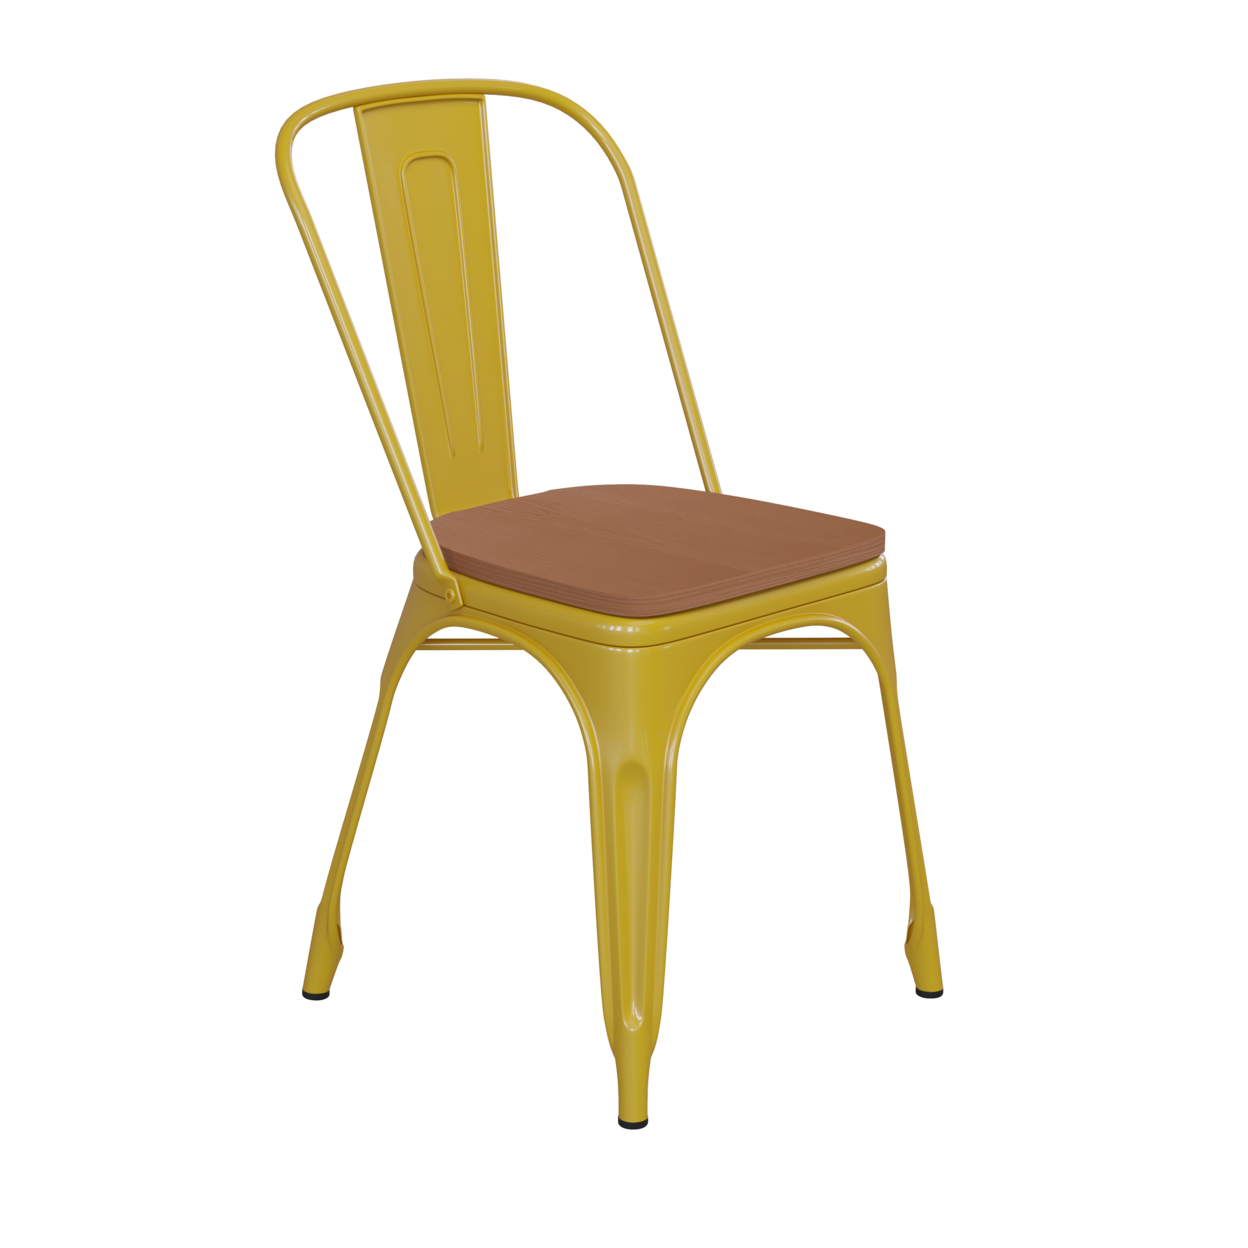 Metal Chair, Curved Open Back, Polyresin Sleek Teak Brown Seat, Yellow